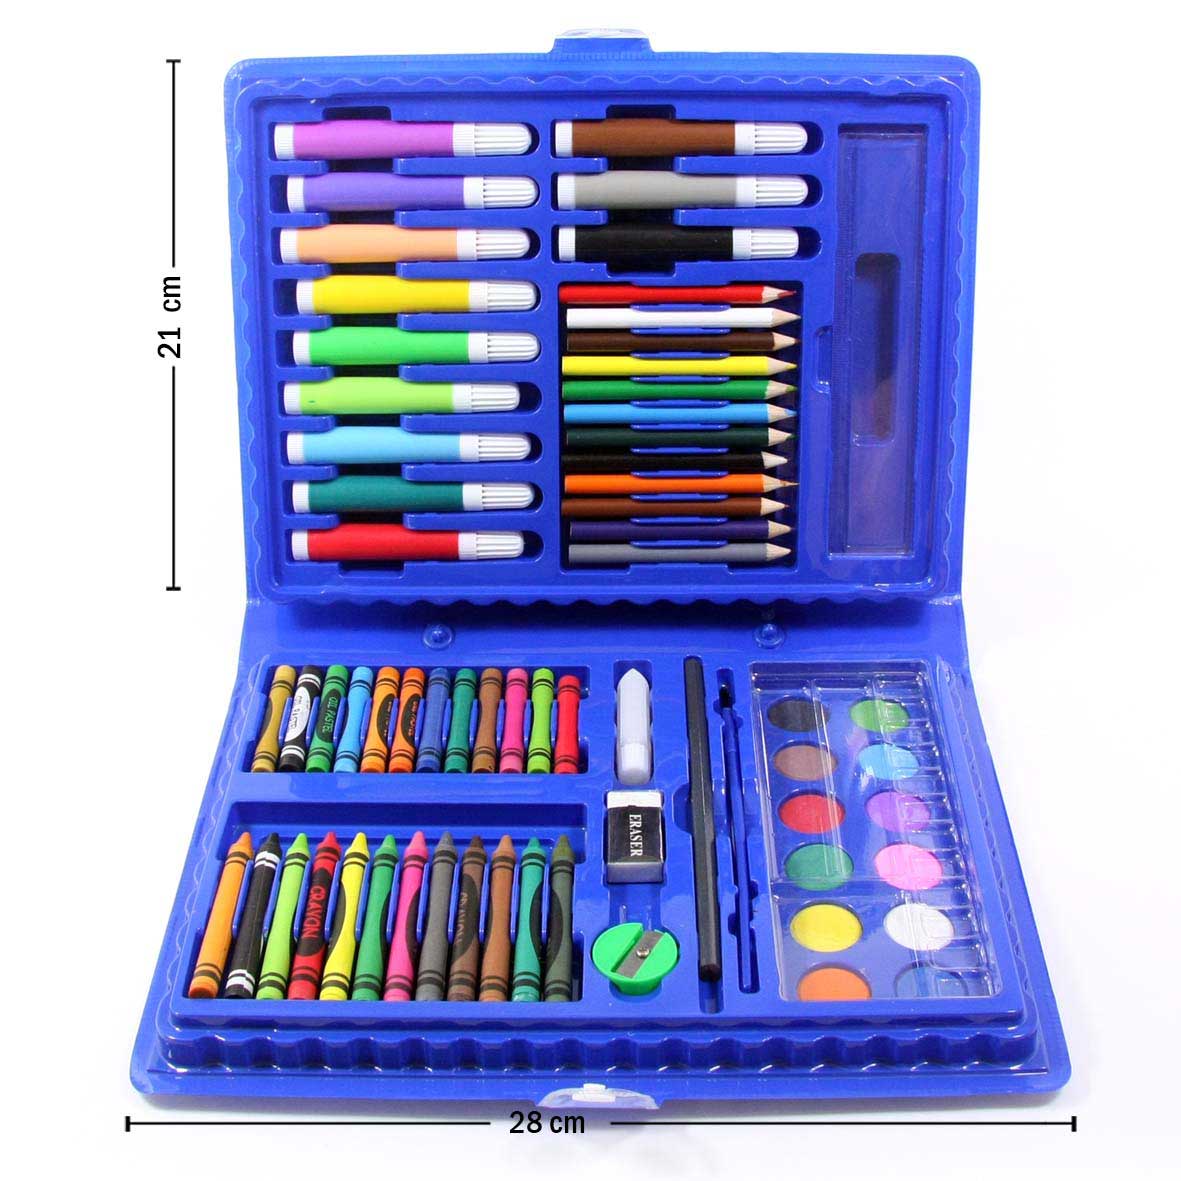 https://donbodegon.com/storage/products/16813891481668074468donbodegon-caja-de-colores-azul-02.jpg